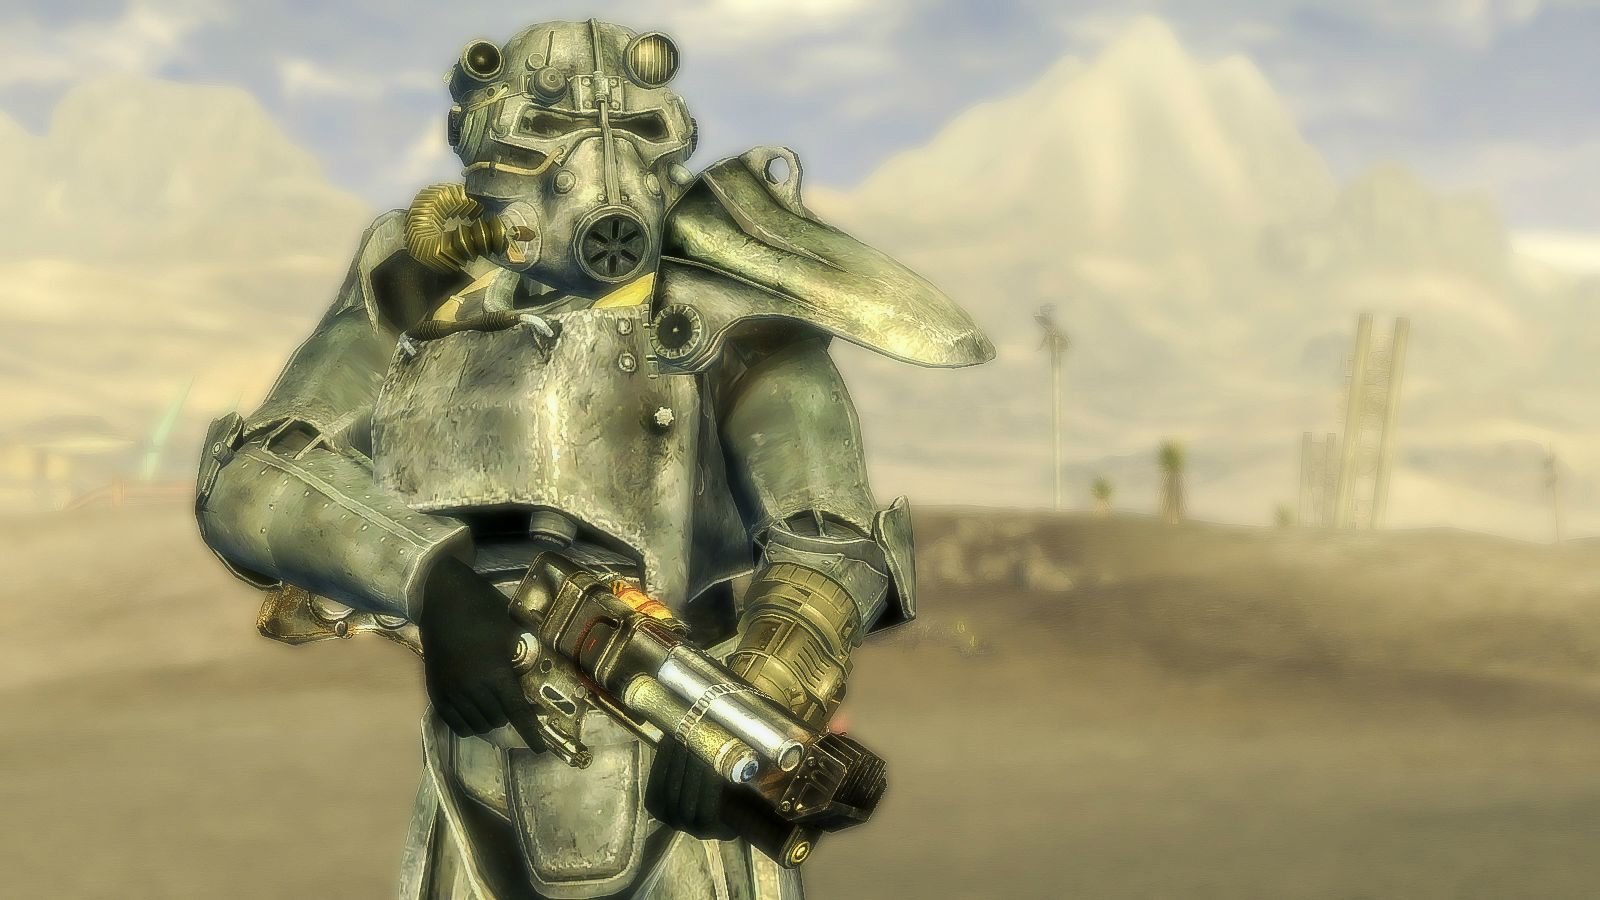 Brotherhood 4. Силовая броня фоллаут 3 арт. Силовая броня братства Fallout 3. T-60 Power Armor Fallout New Vegas. Фоллаут 4 броня из New Vegas.